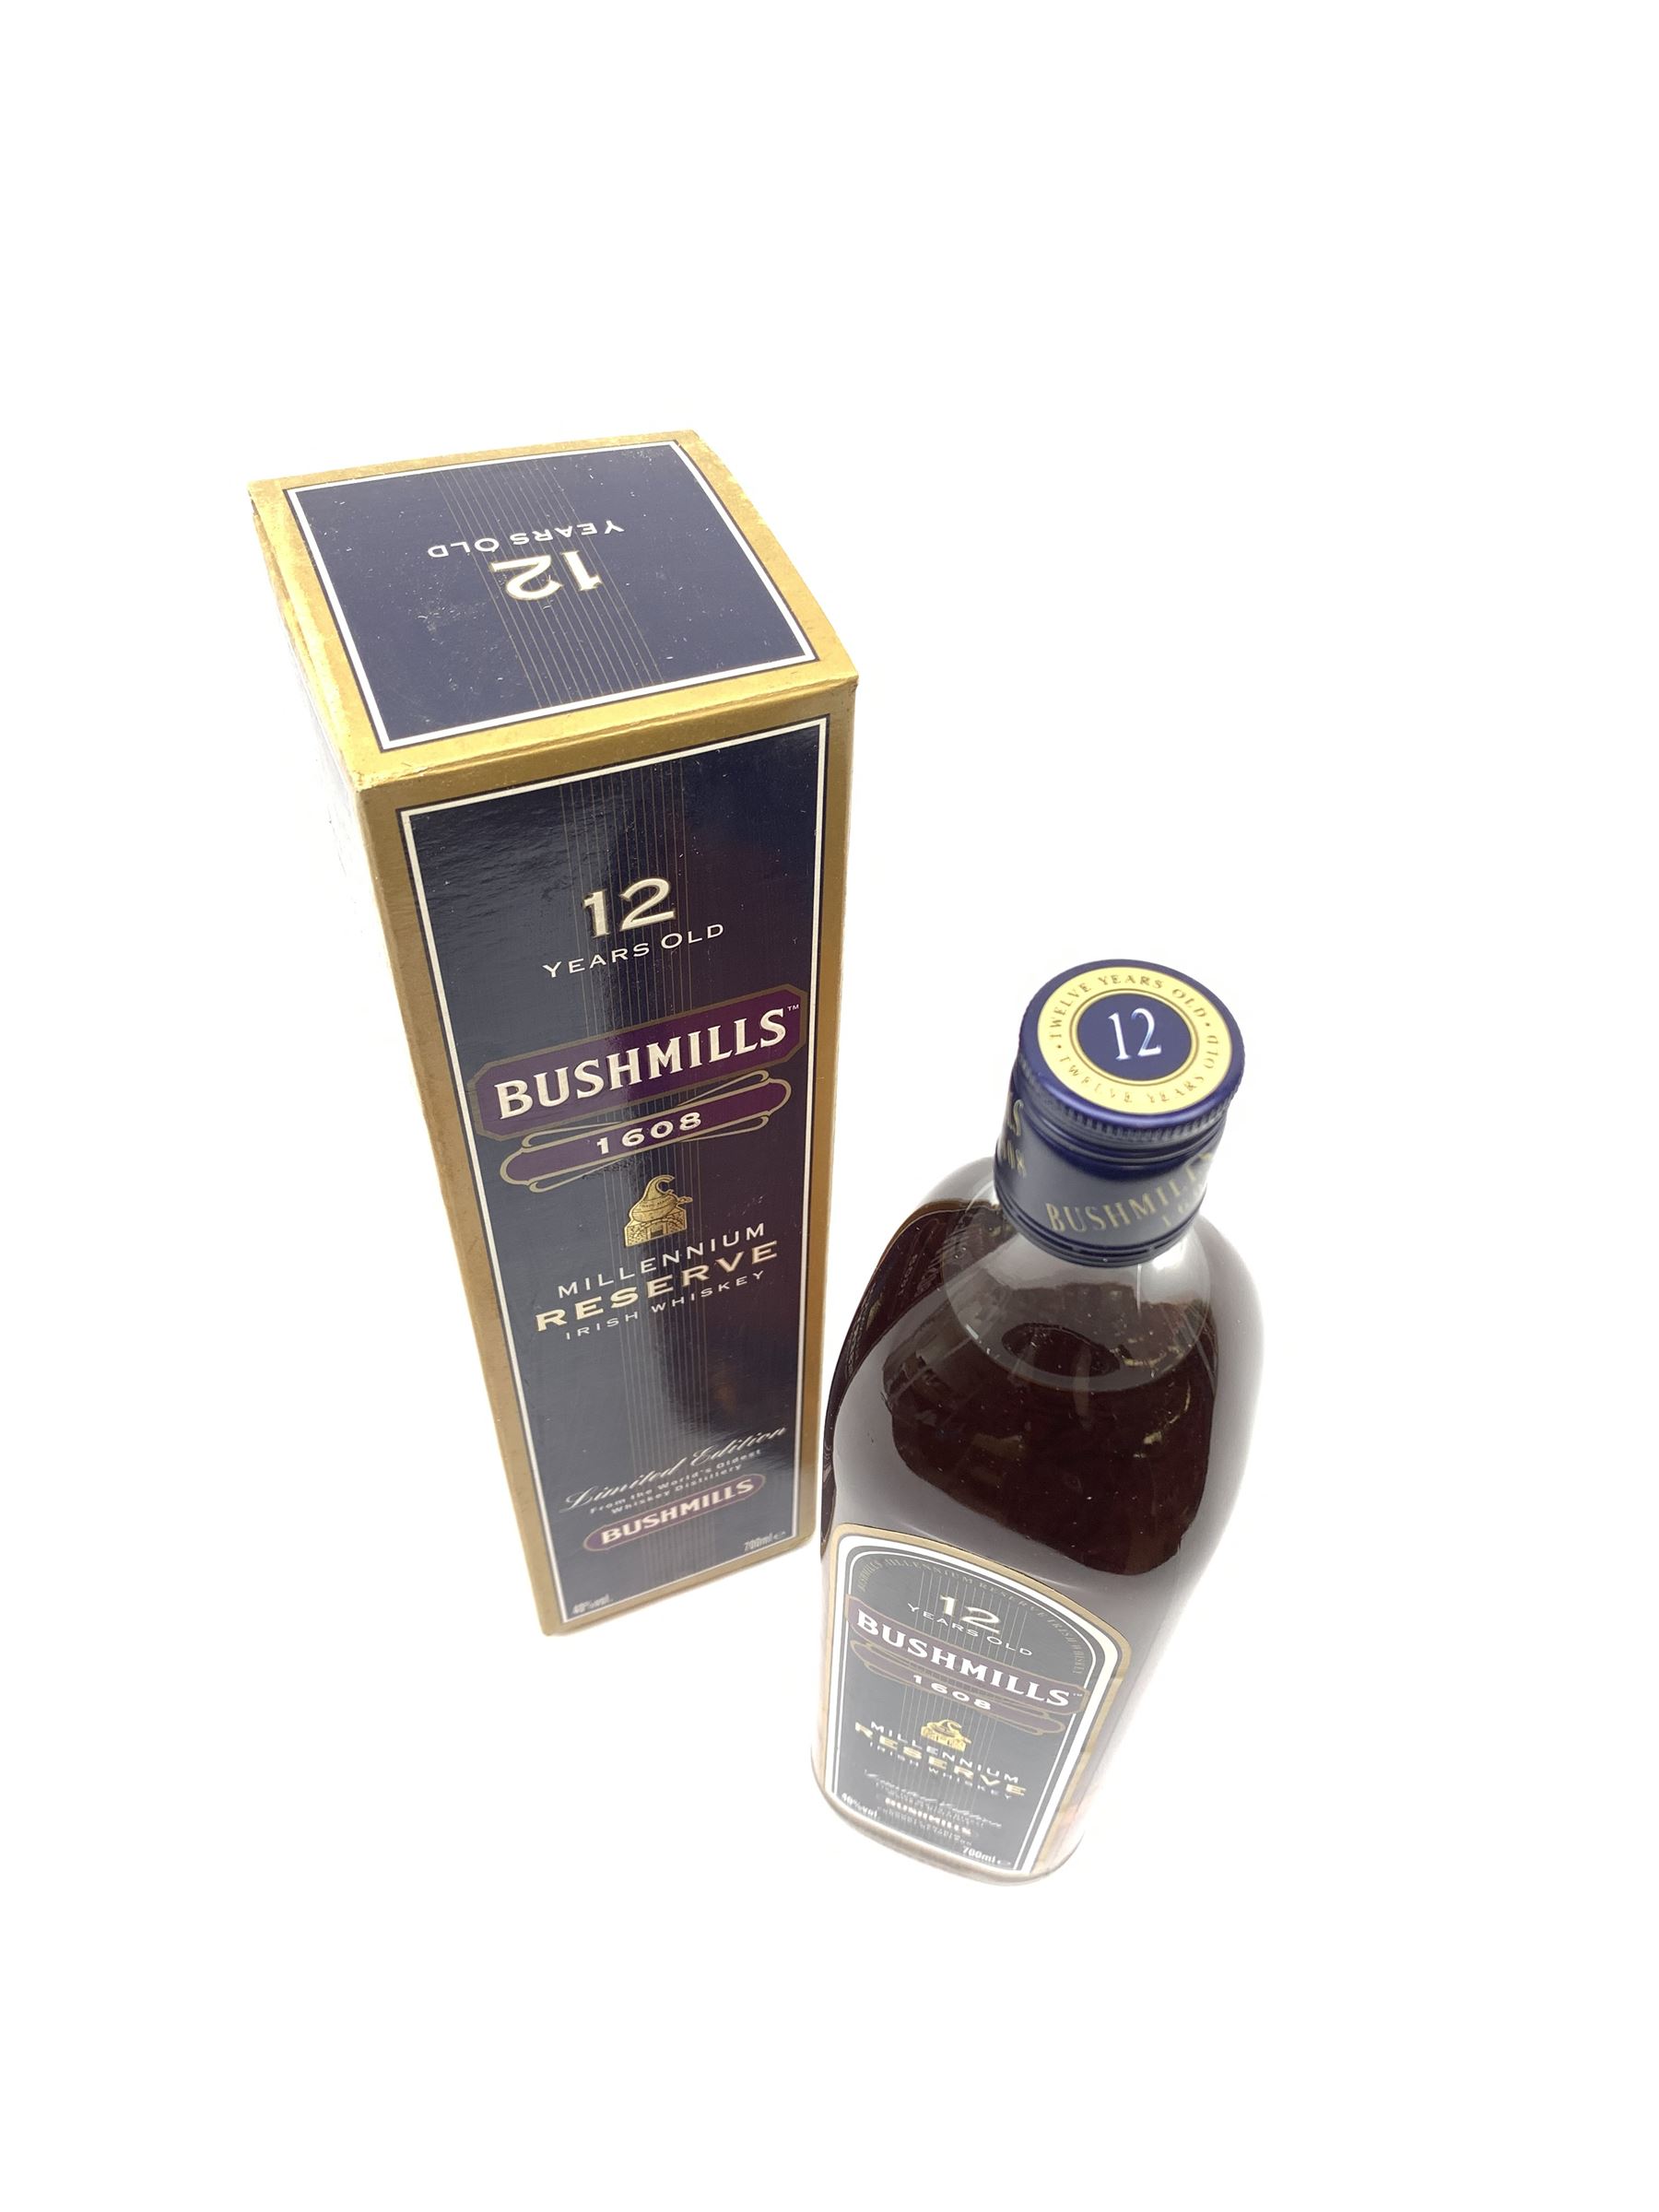 Bushmills Millennium Reserve Irish Whisky - Image 2 of 4